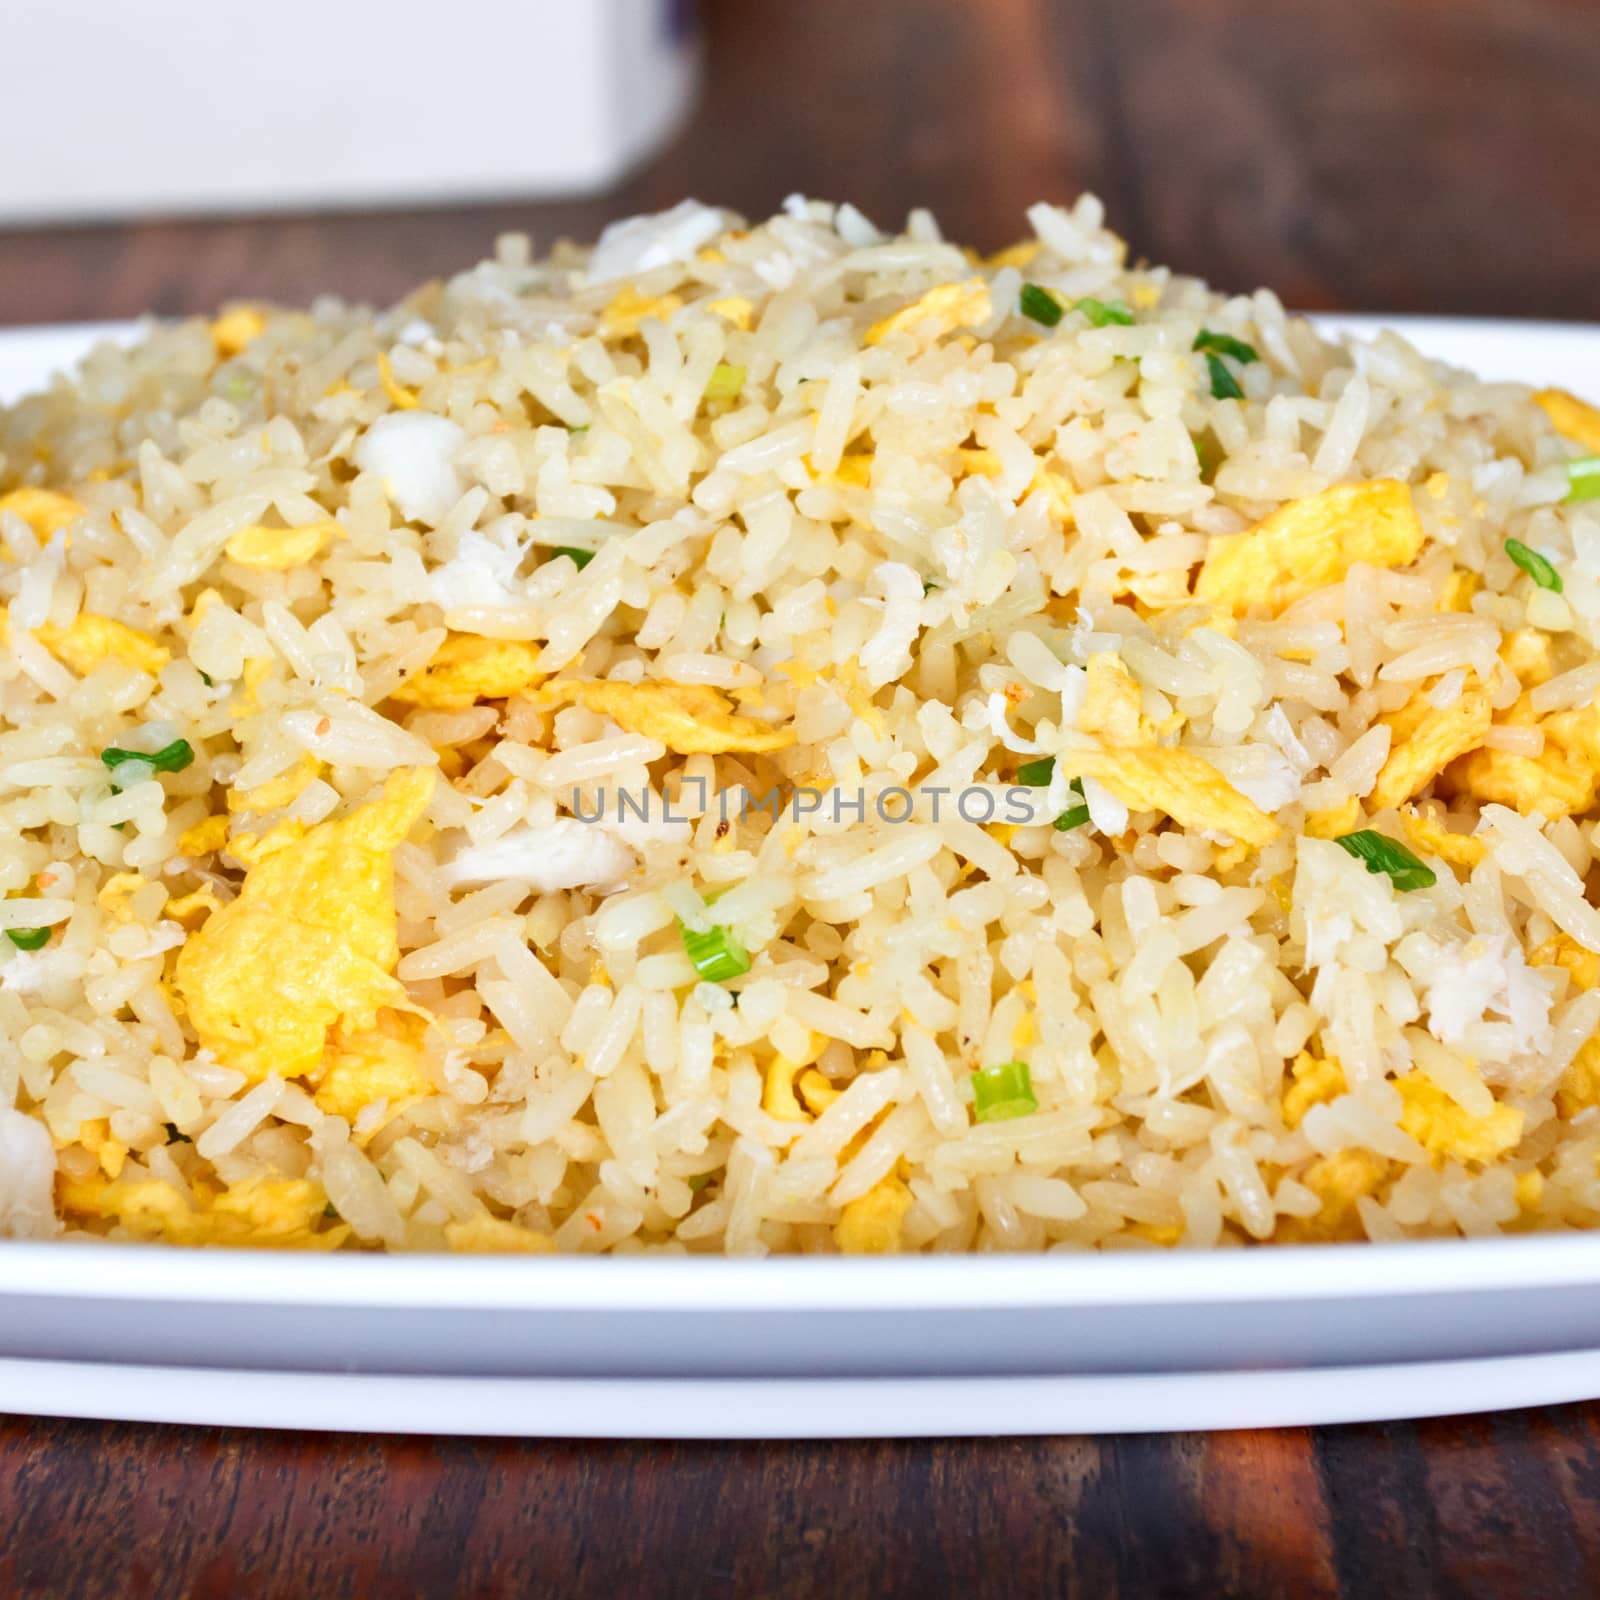 Crab fried rice, Thai cuisine style.